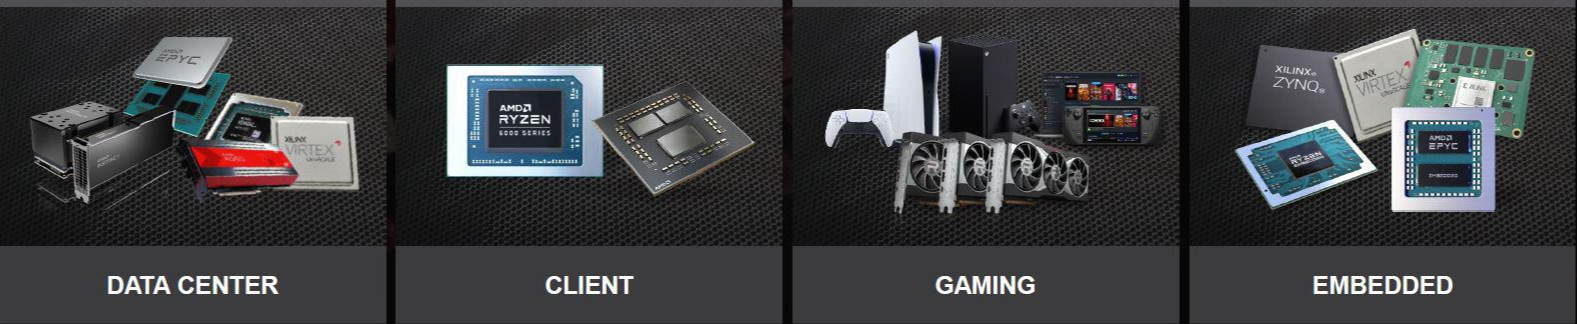 AMD의 제품 포트폴리오 이미지